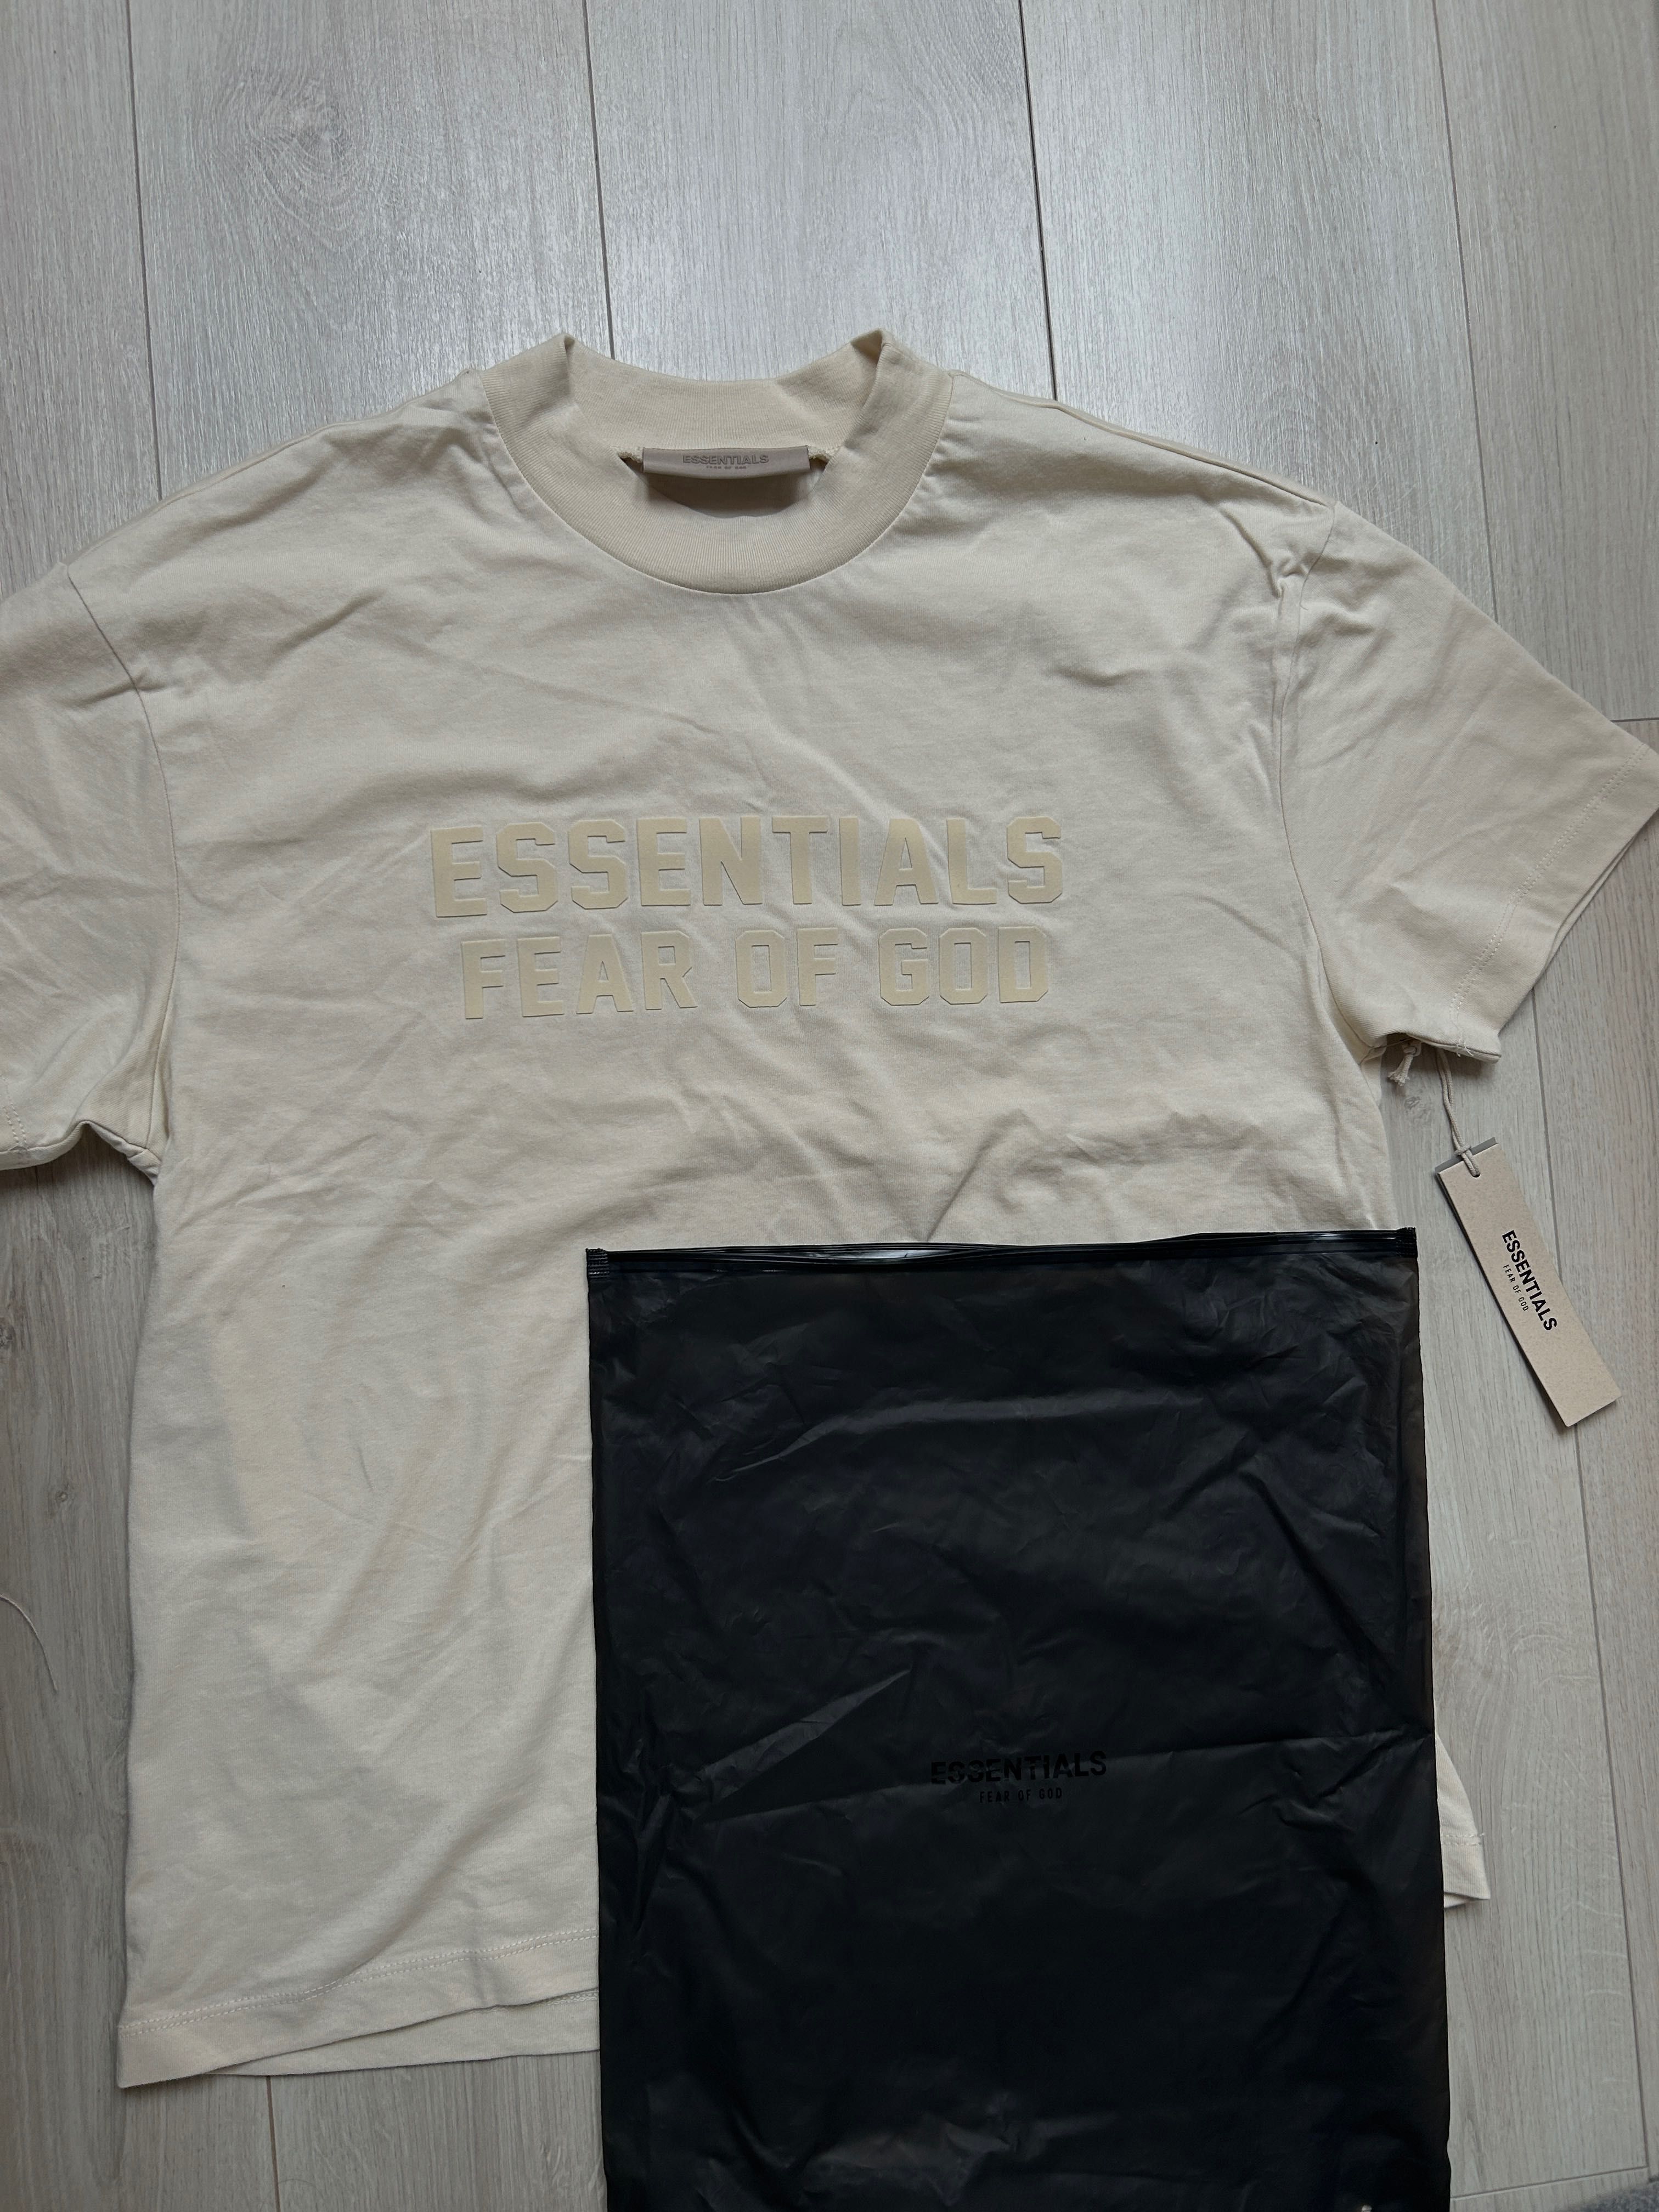 Essentials tshirt